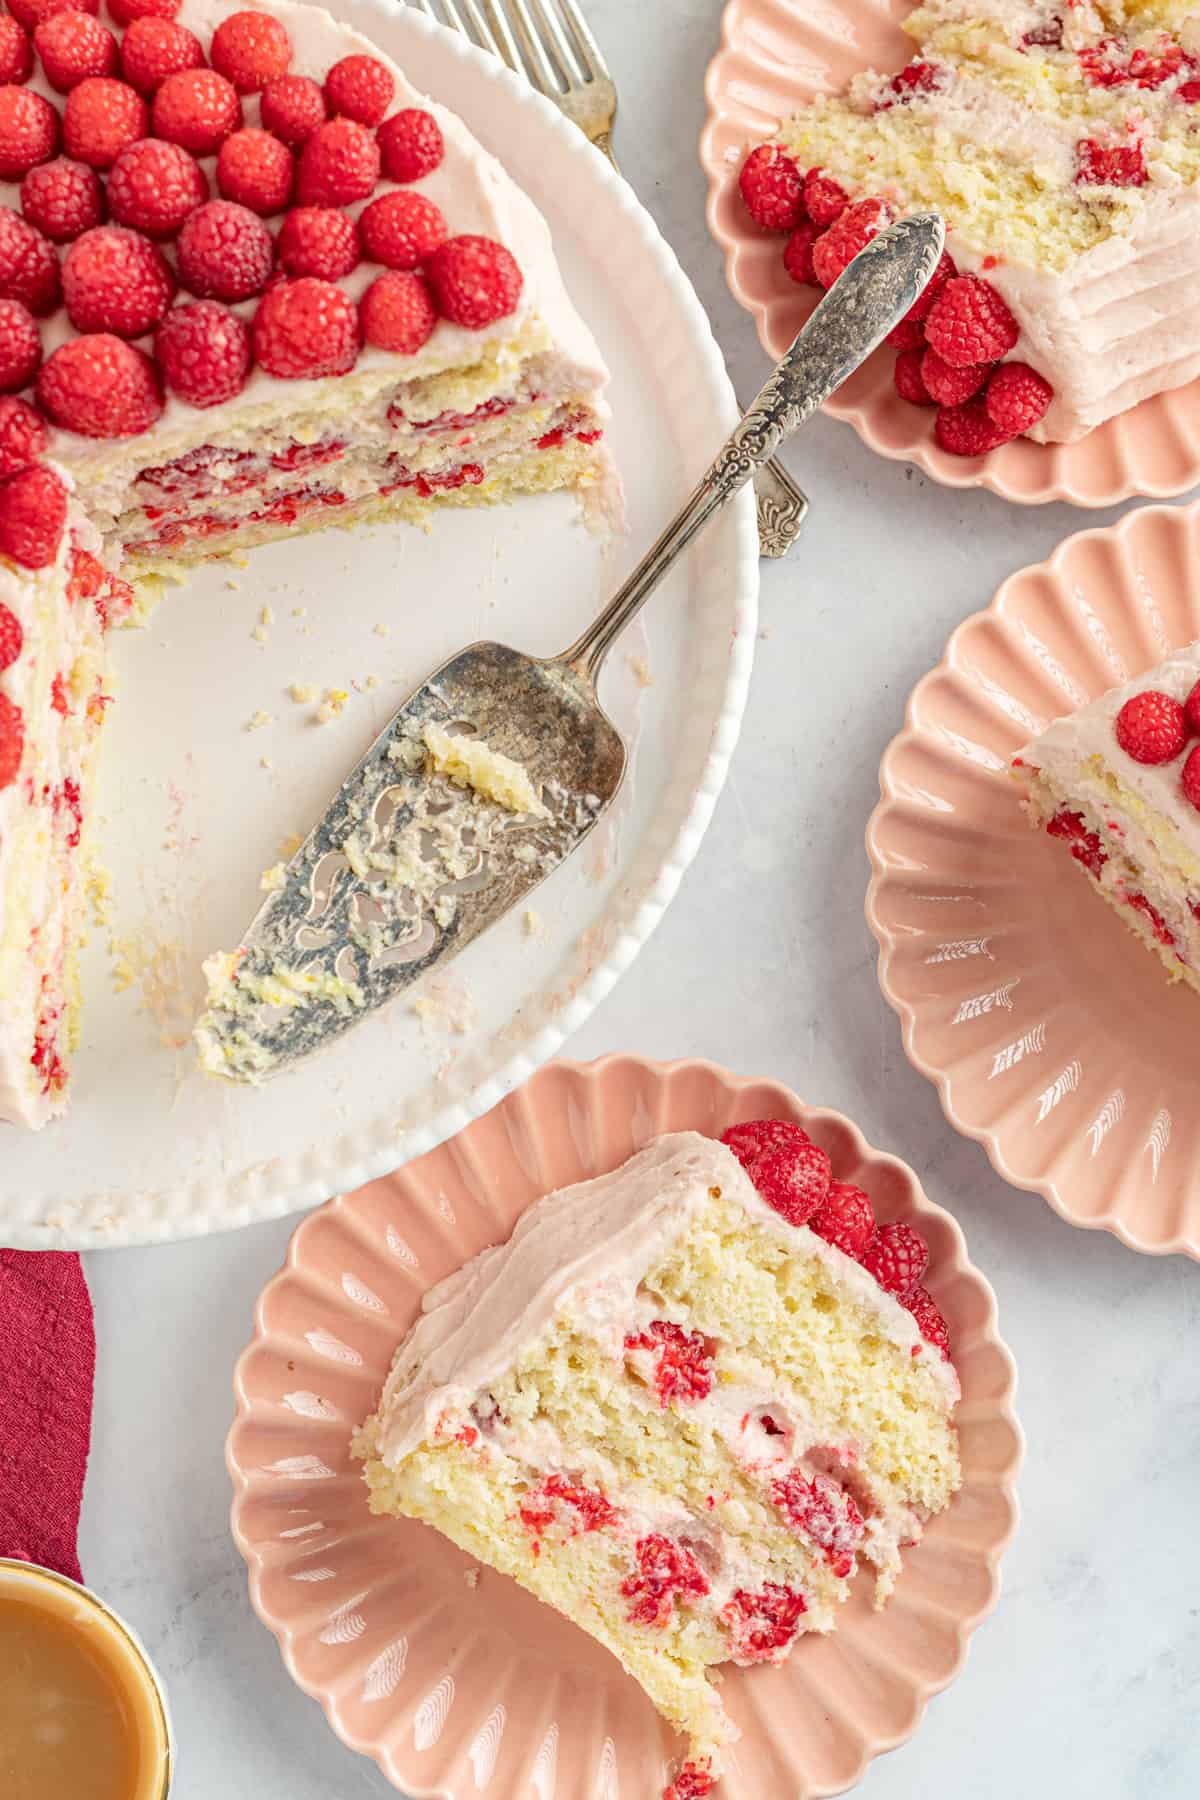 Slices of raspberry lemon cake on plates next to remaining layer cake.